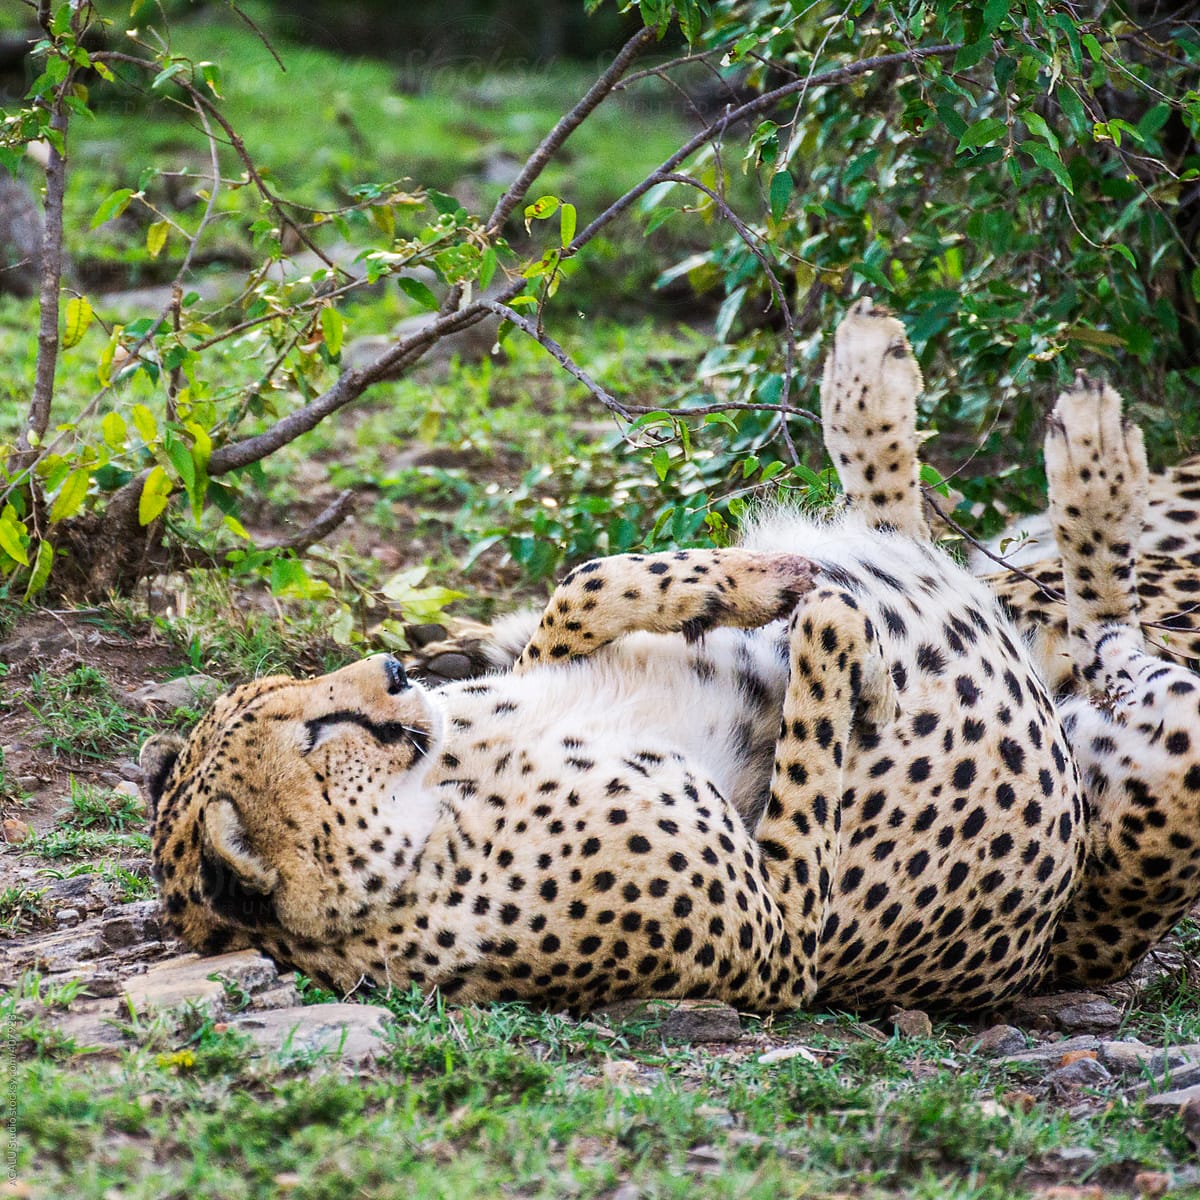 Cheetah resting under a tree